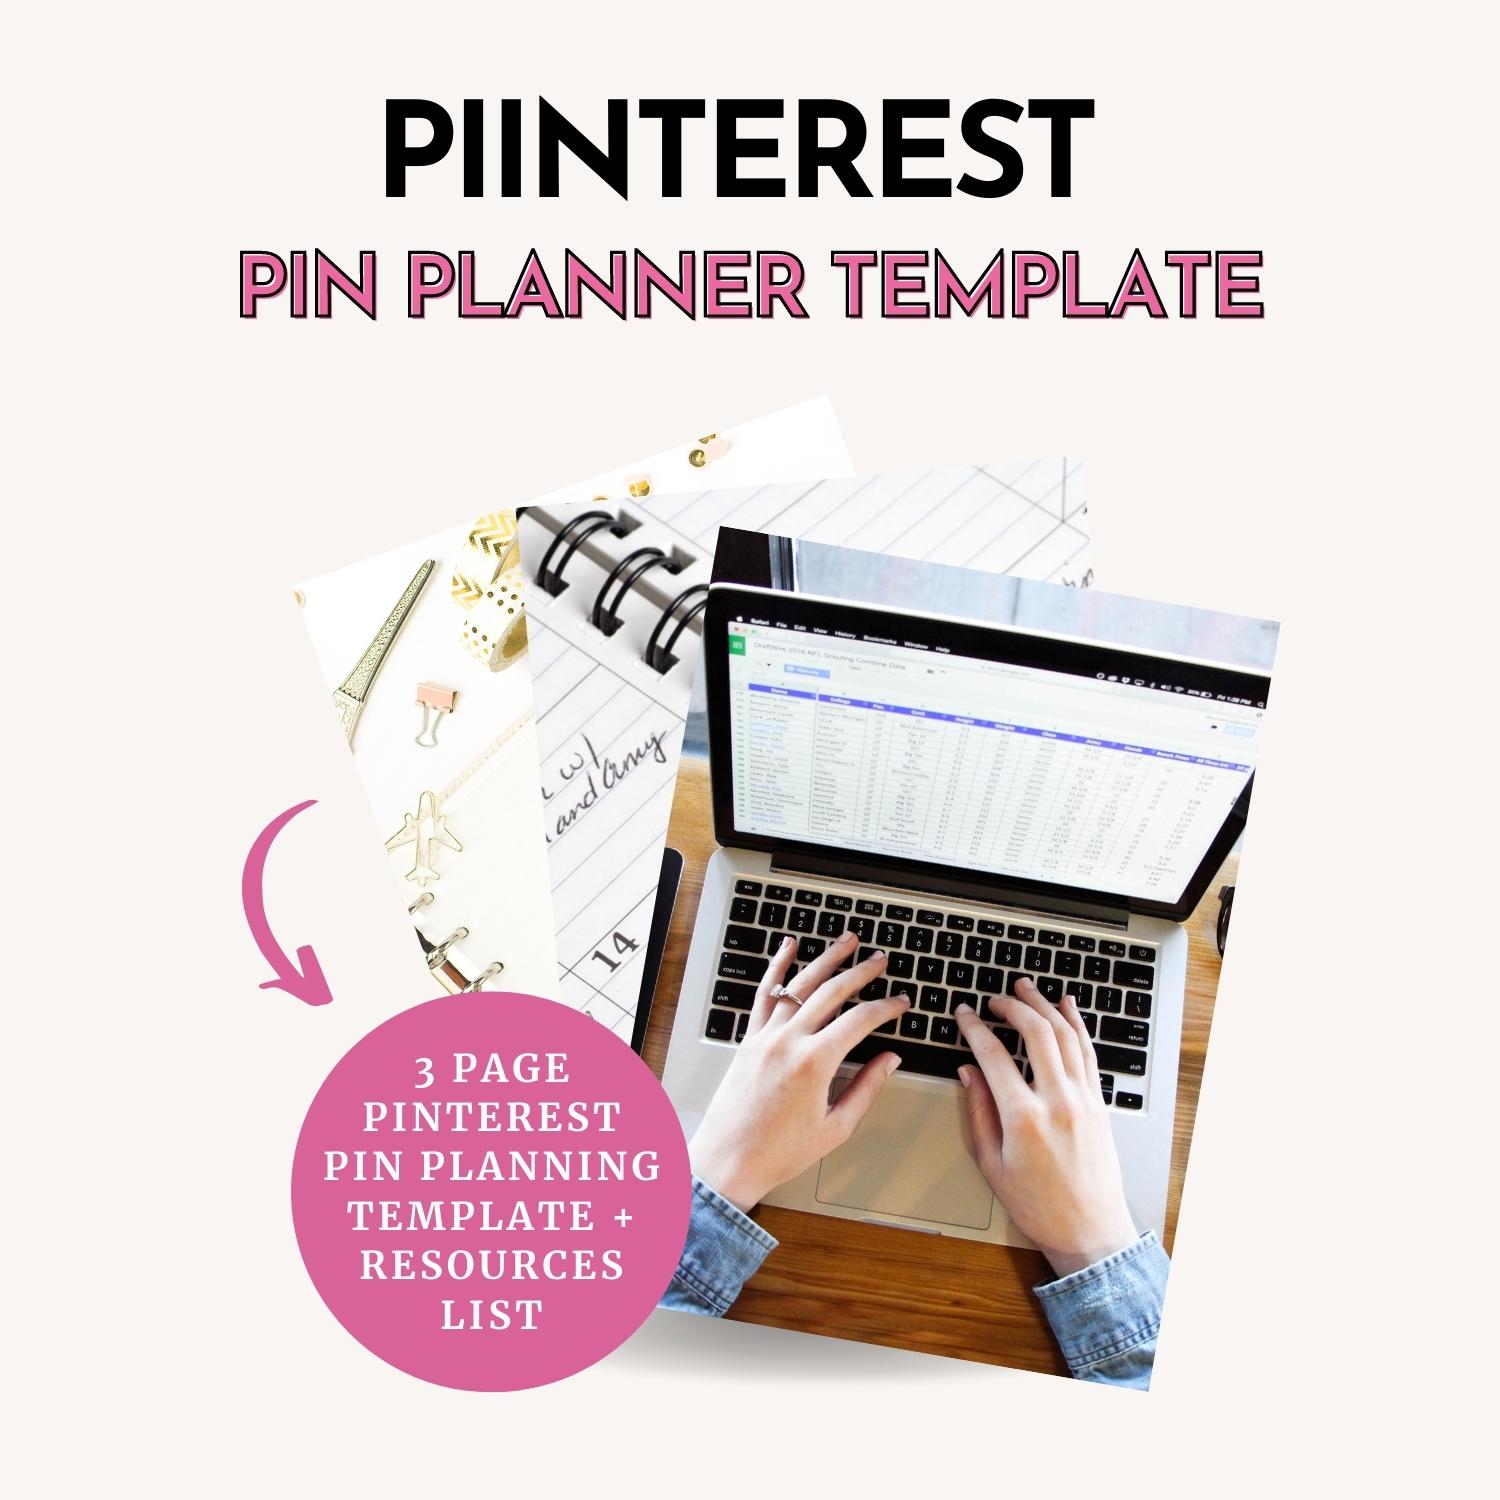 Pinterest pin planner, free download, free pinterest pin planner template